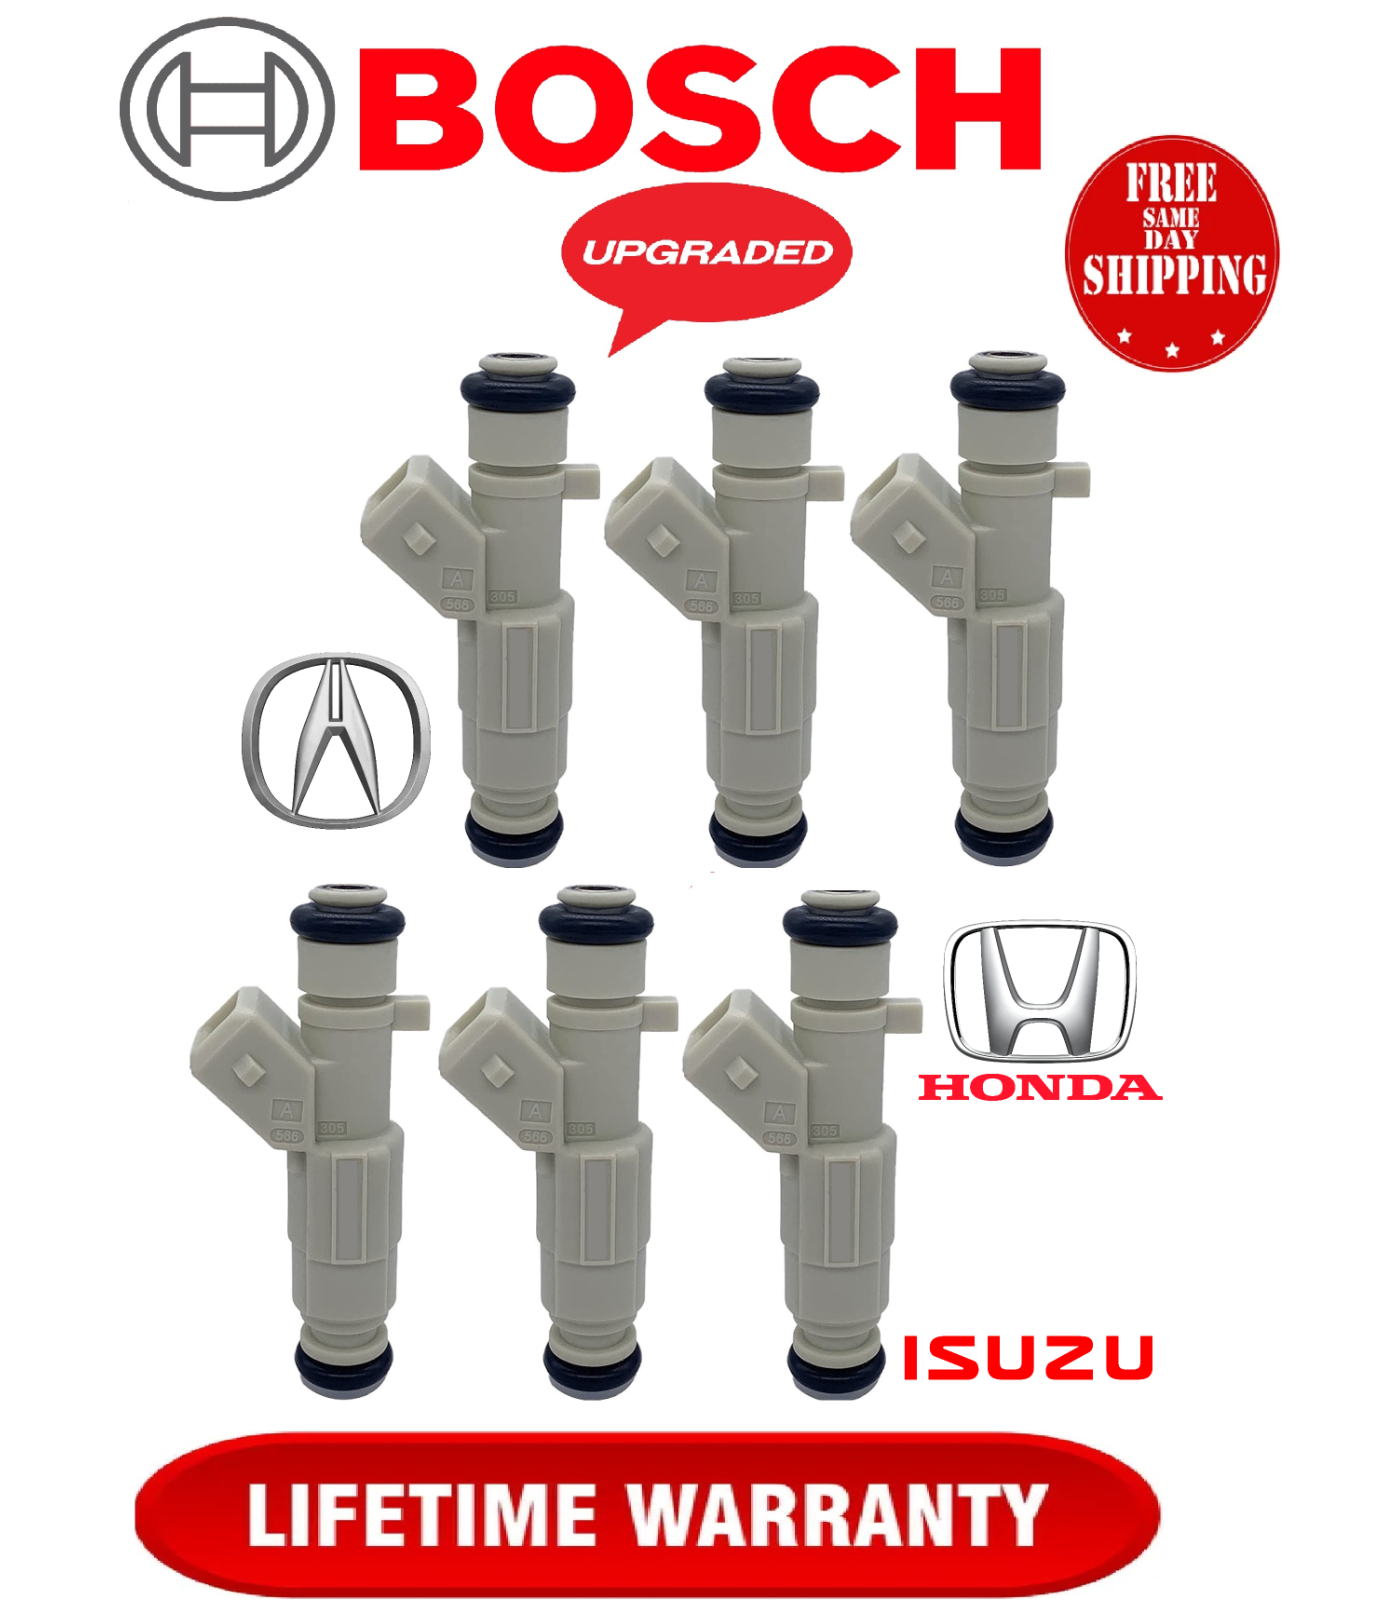 NEW UPGRADED OEM Bosch x6 4 hole 19LB Fuel Injectors for Honda Acura Isuzu 3.2L - $258.64